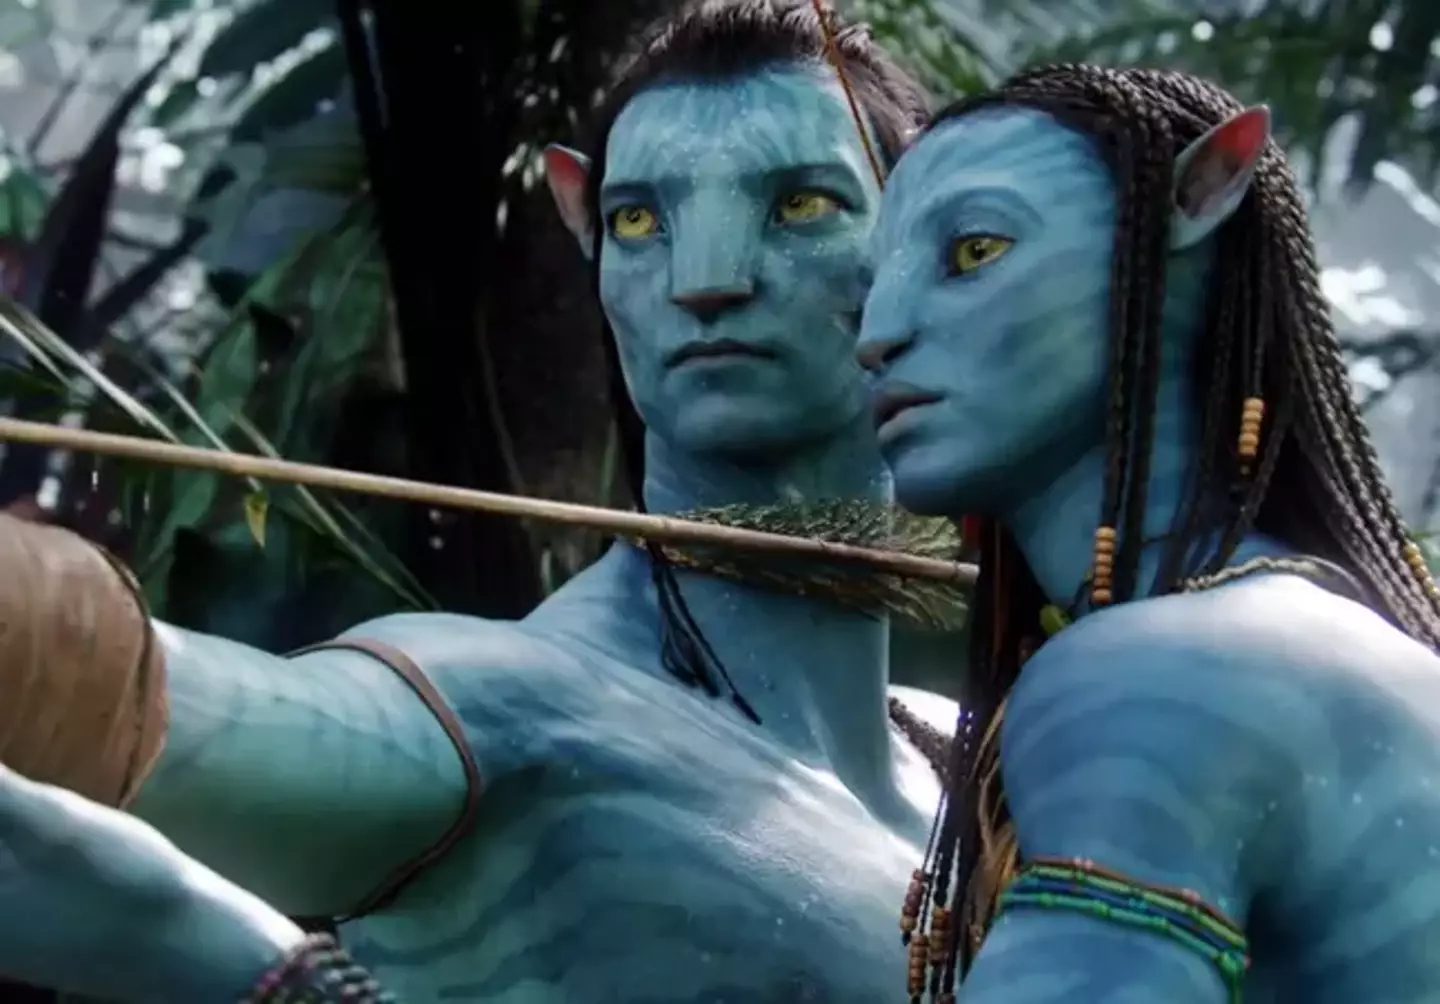 Cameron explained how the Avatar sequel overcame the 'white saviour' motif.